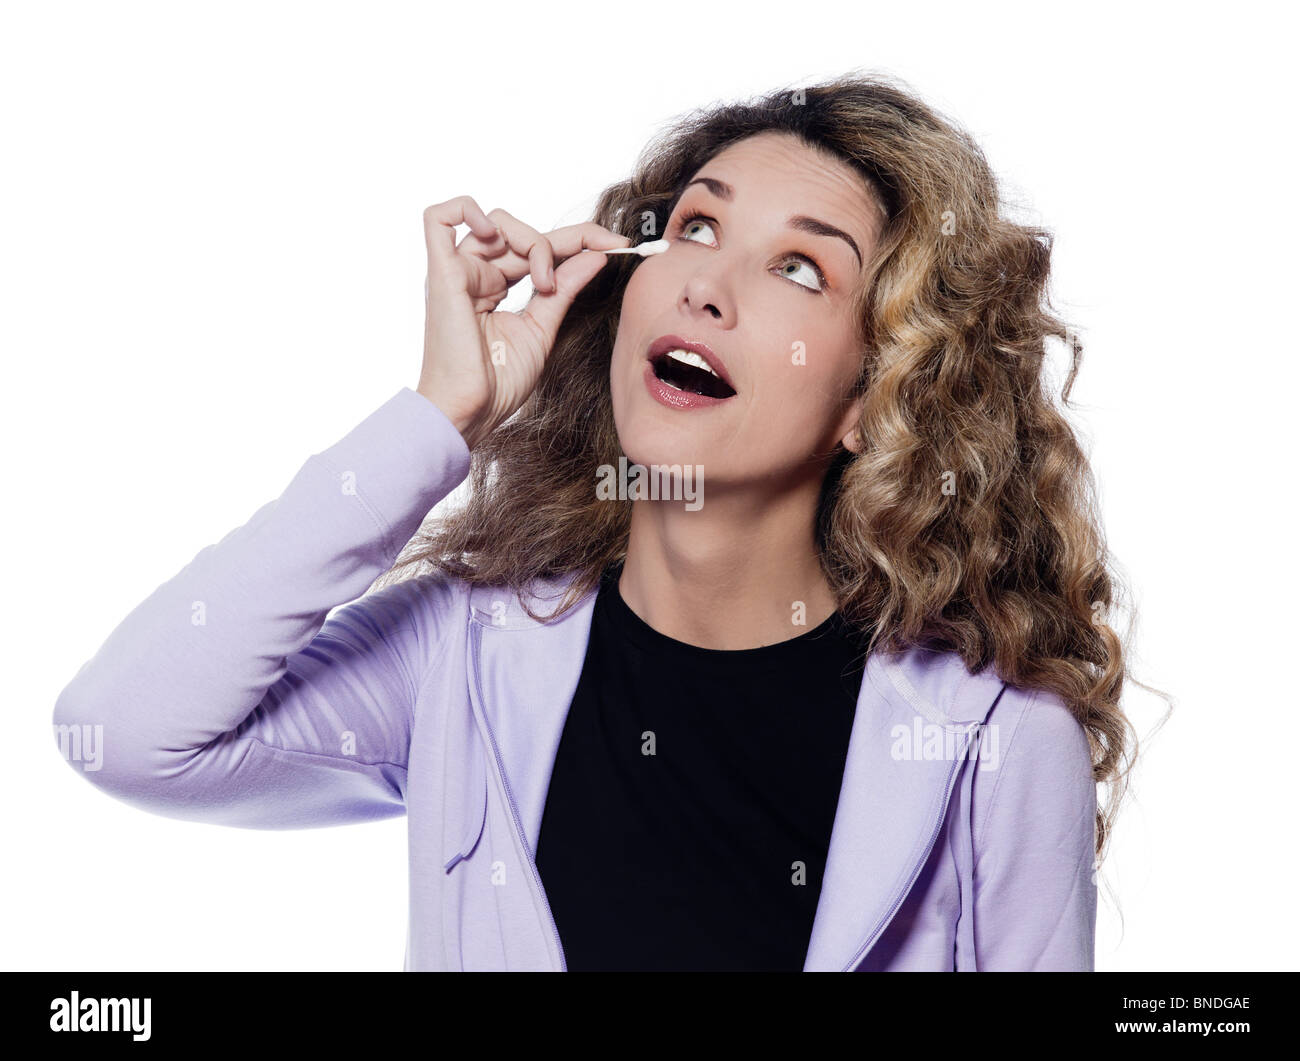 caucasian woman makeup remove portrait isolated studio on white background Stock Photo